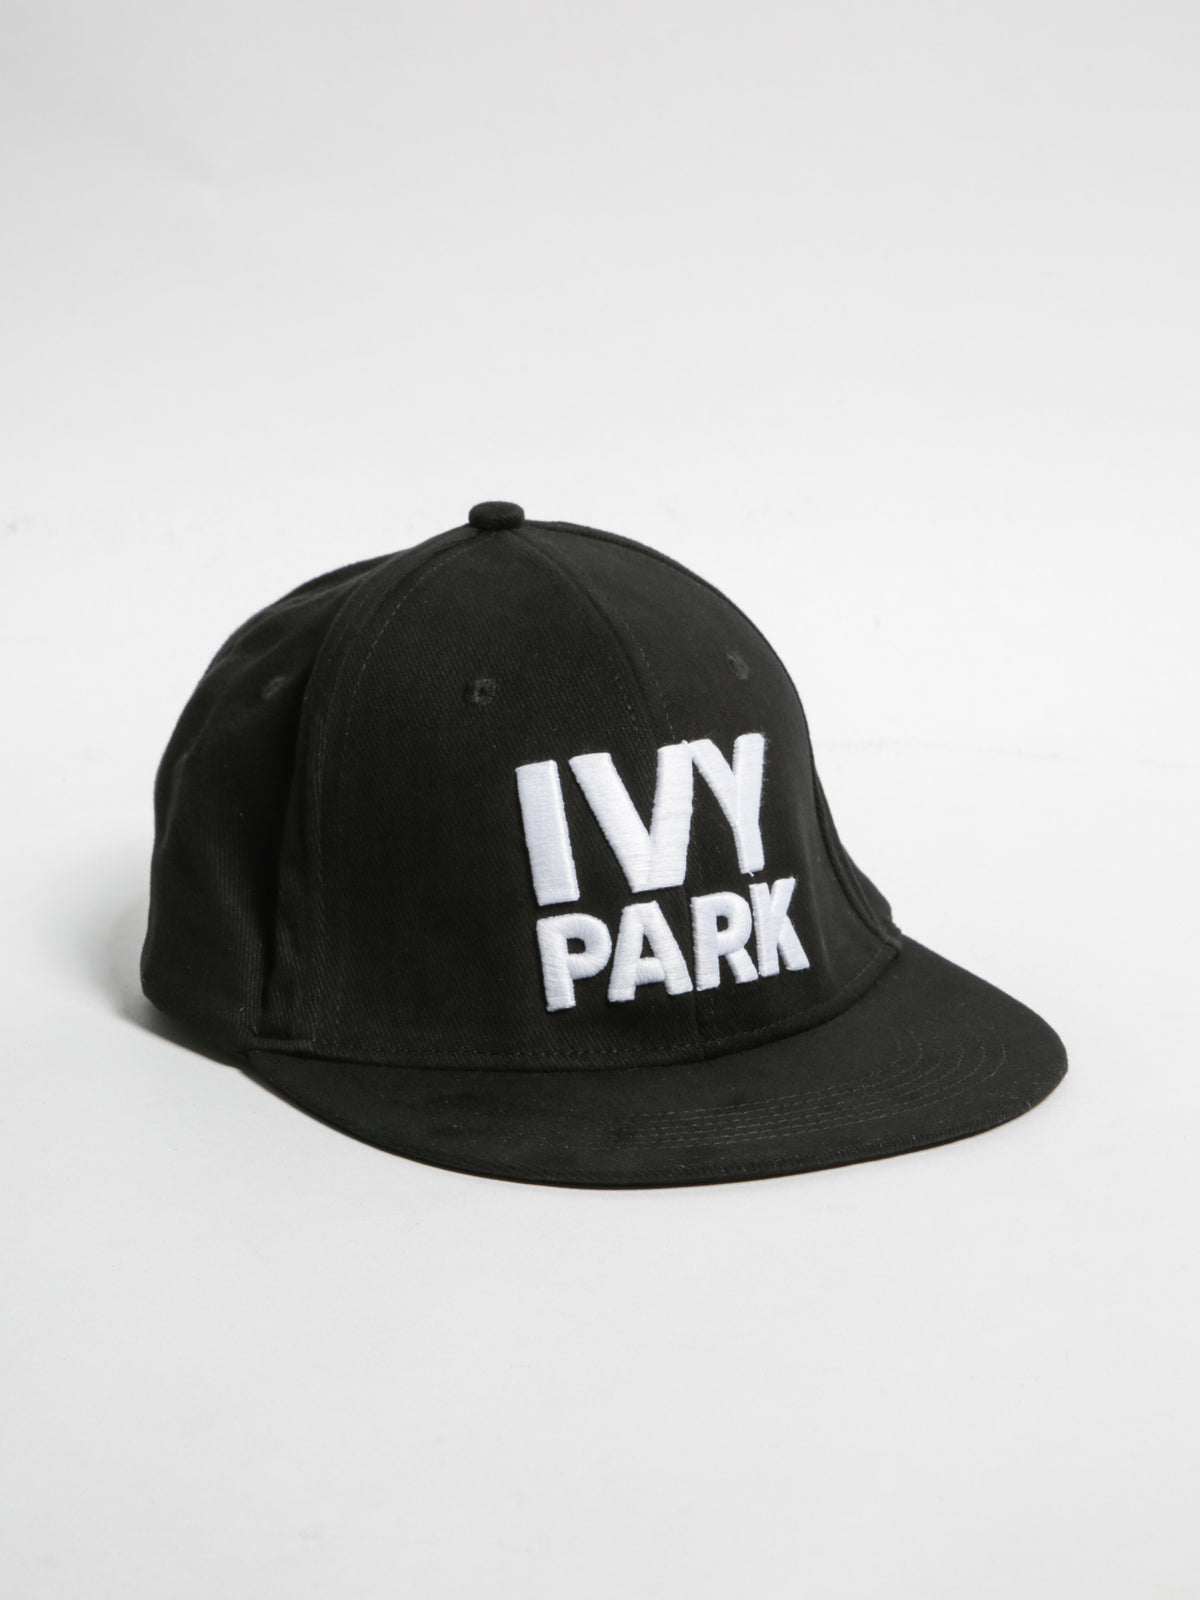 Ivy Park Logo Snapback in Black &amp; White